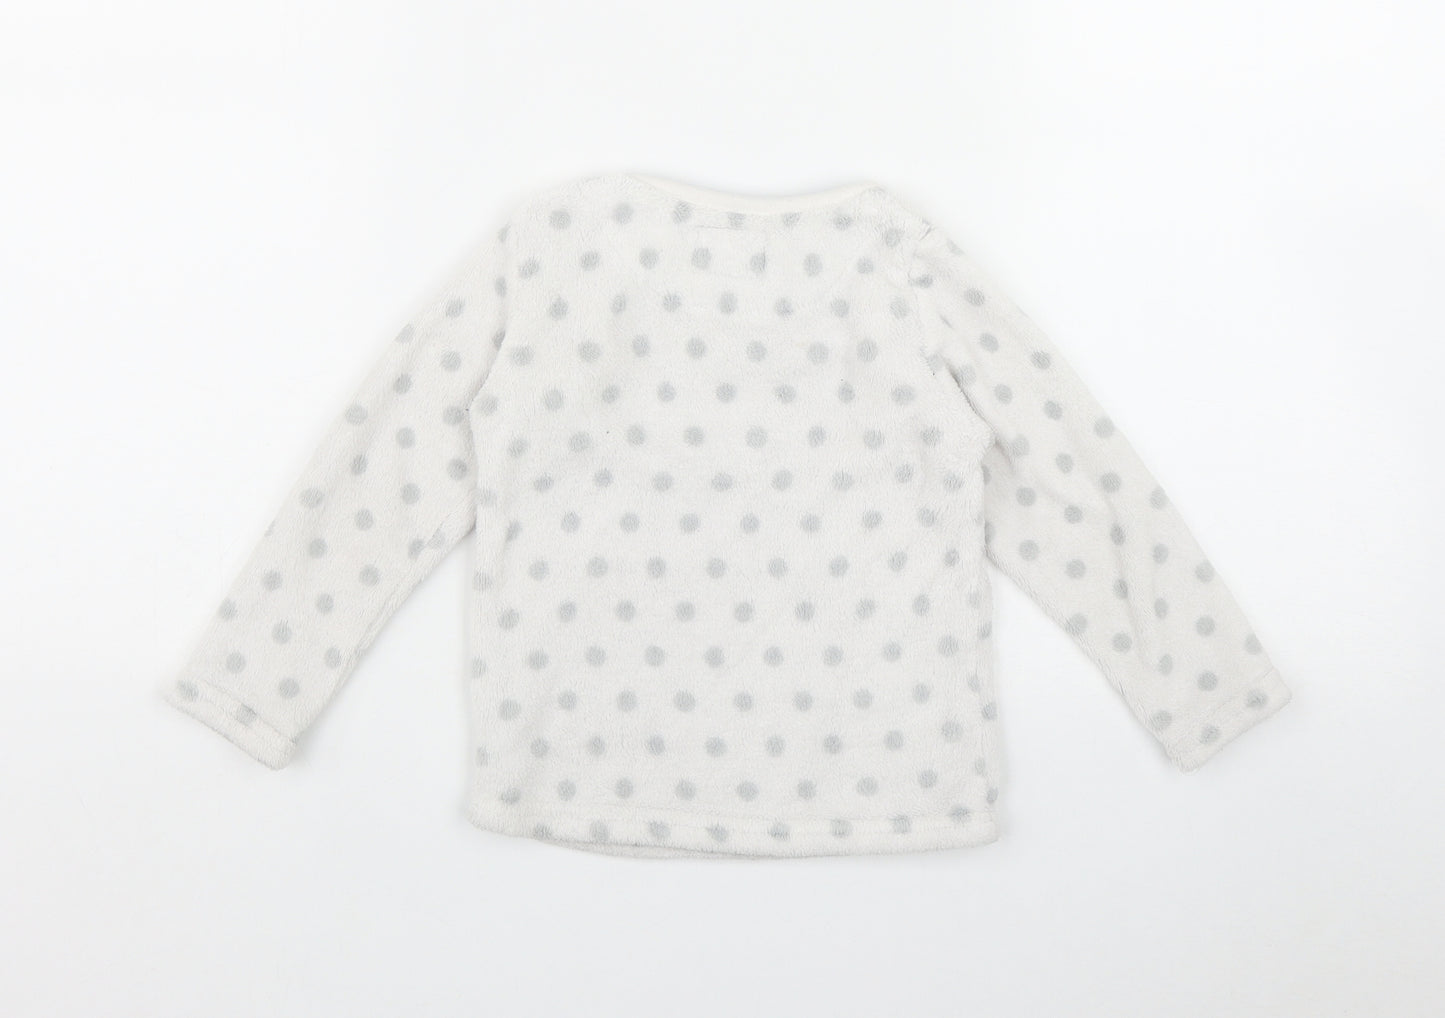 Primark Girls Grey Polka Dot Polyester Top Pyjama Top Size 3-4 Years   - 'Chill' Penguins